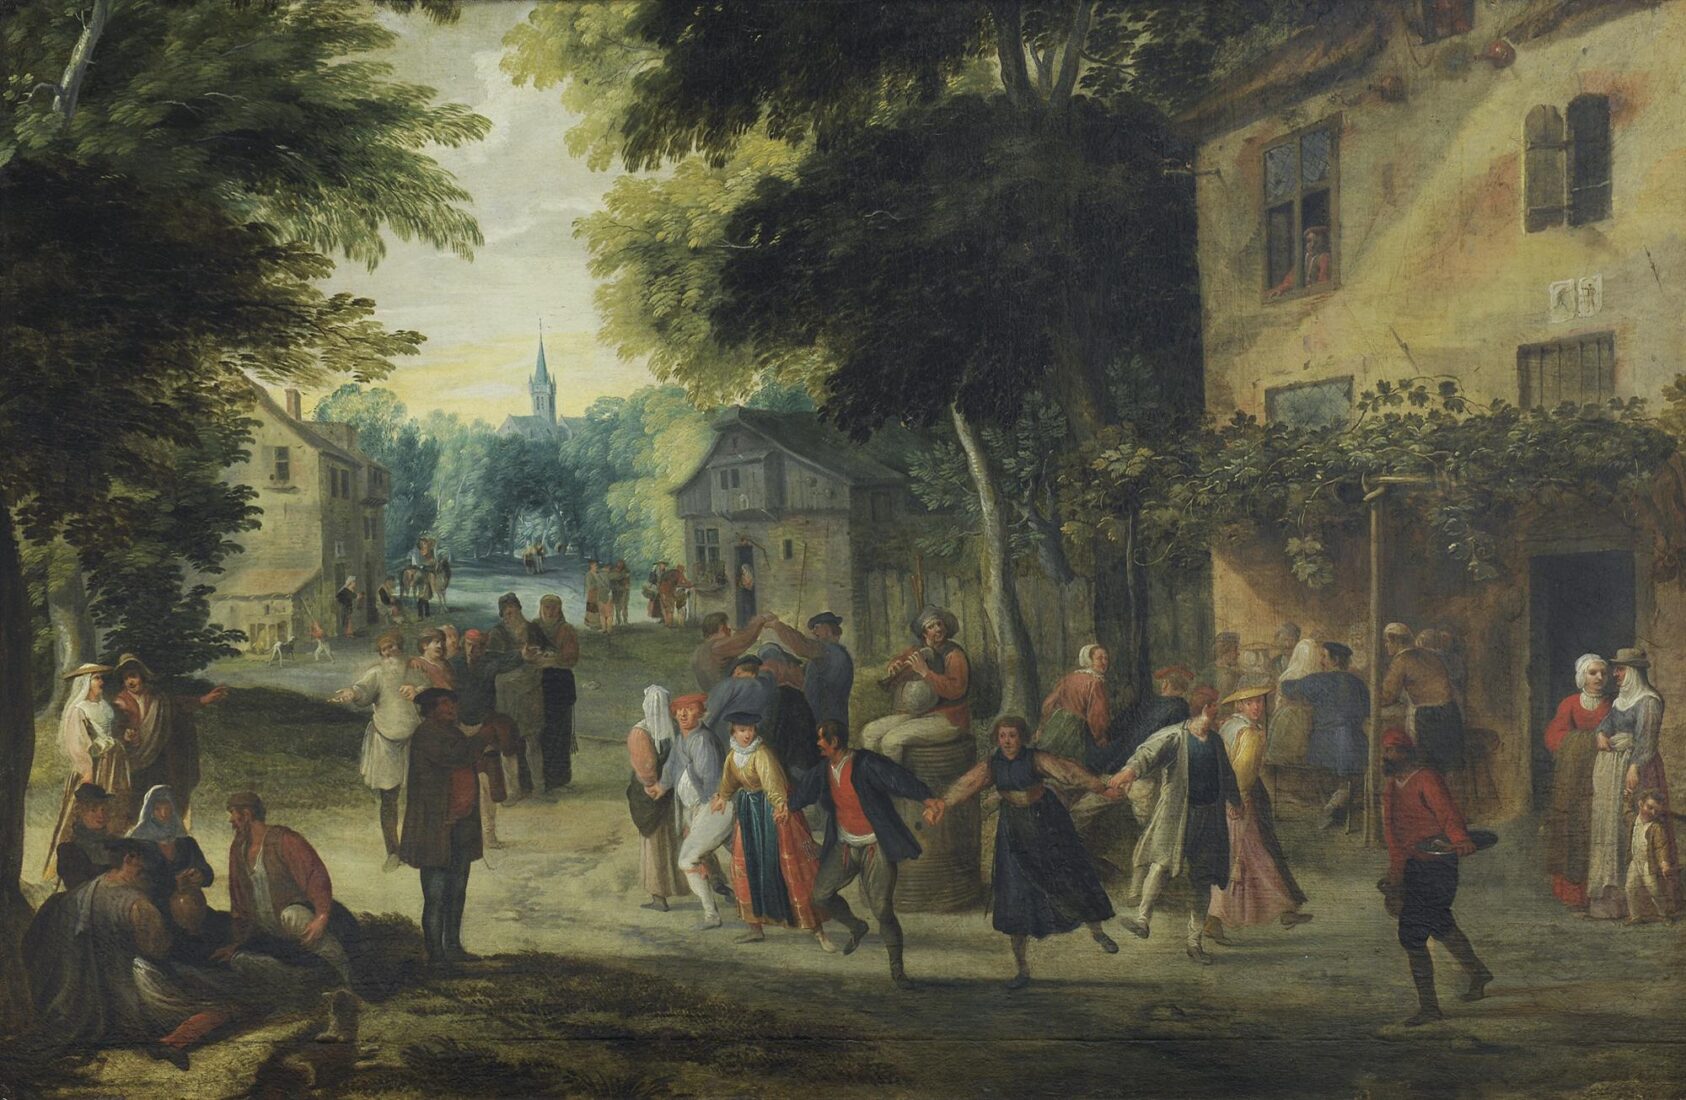 Landscape with Dancing Peasants - Brueghel Jan II, attributed to an imitator